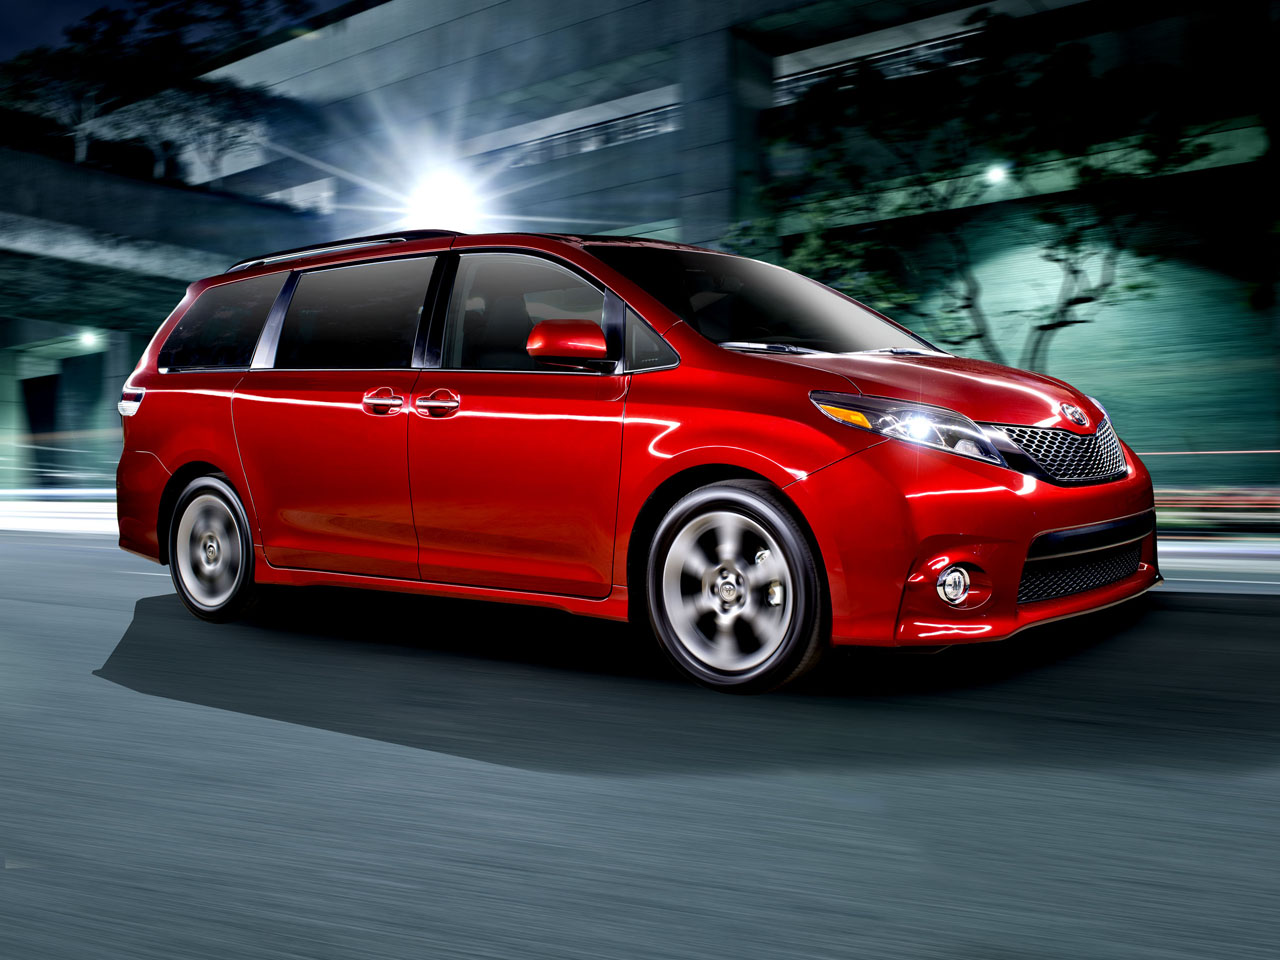 New 2015 Toyota Sienna Reveals Updated Interior Carcostcanada